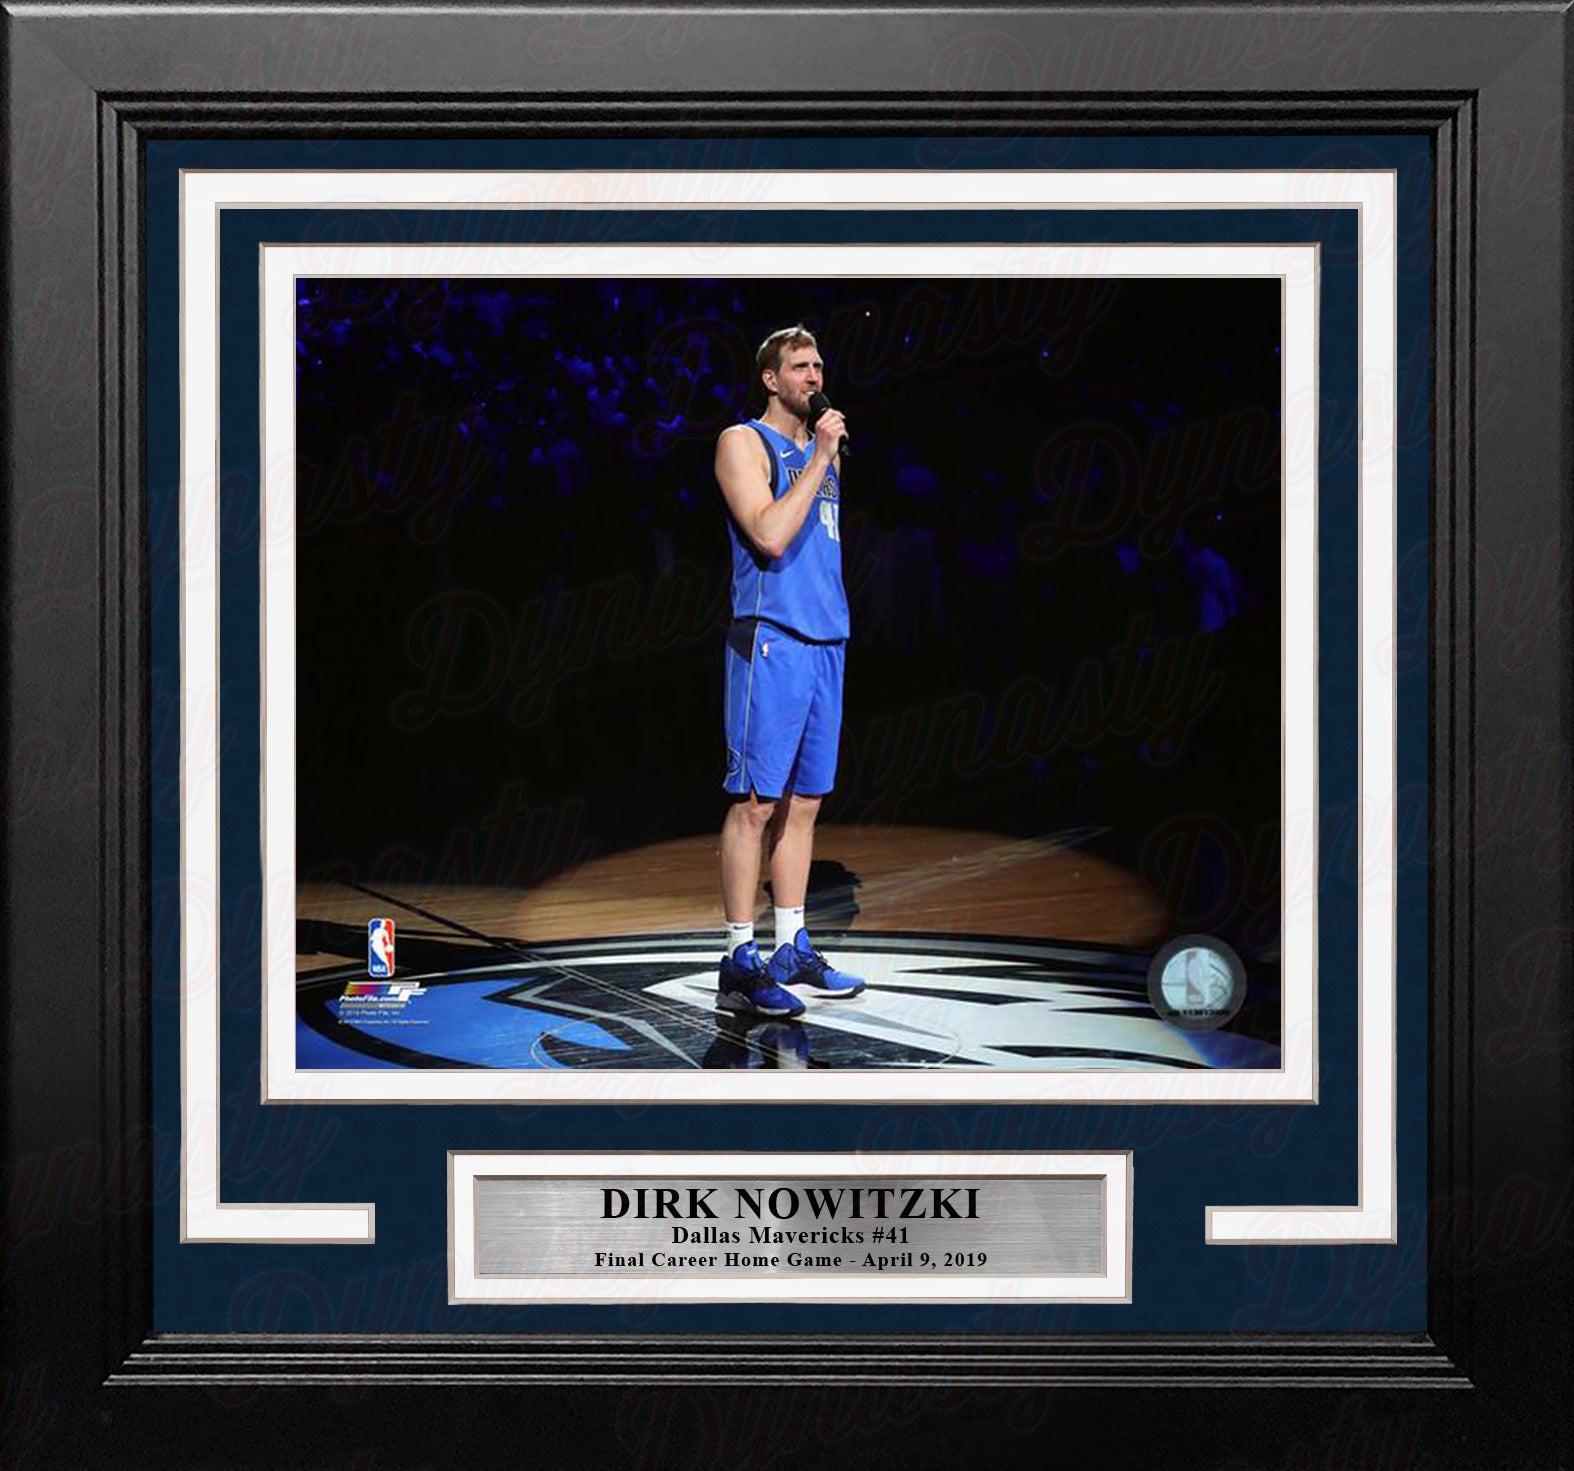 Dirk Nowitzki Dallas Mavericks Final Career Home Game NBA Basketball 8" x 10" Framed Photo - Dynasty Sports & Framing 